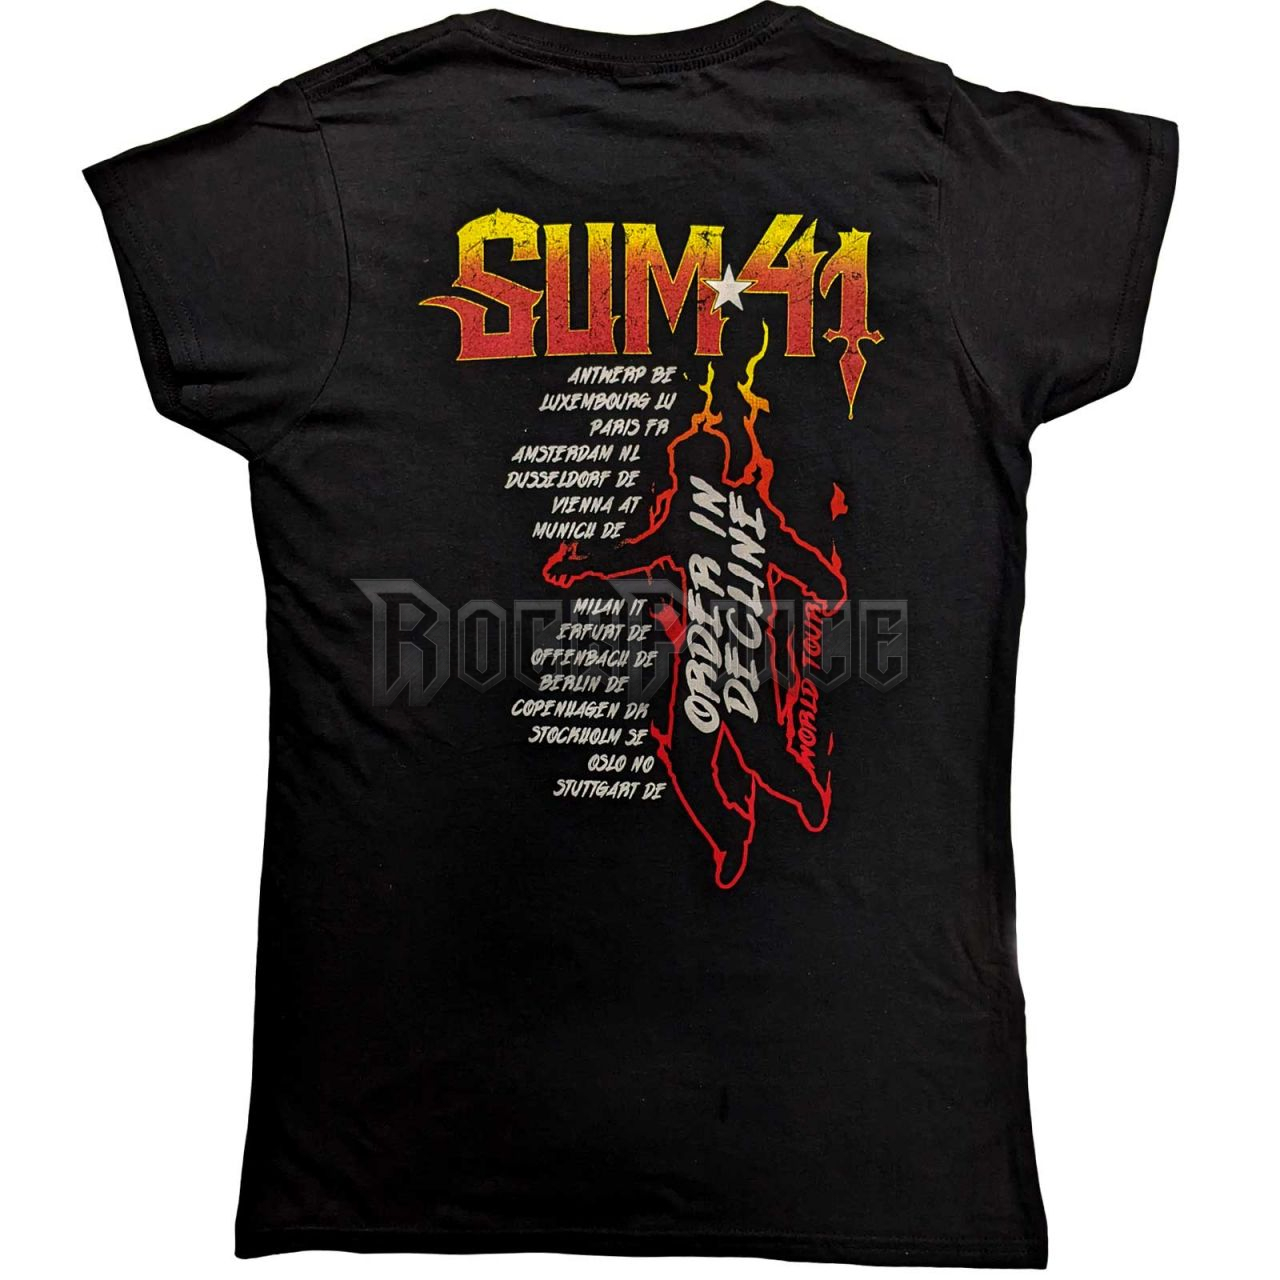 Sum 41 - Order In Decline Tour 2020 Band Photo - női póló - SUMTS06LB